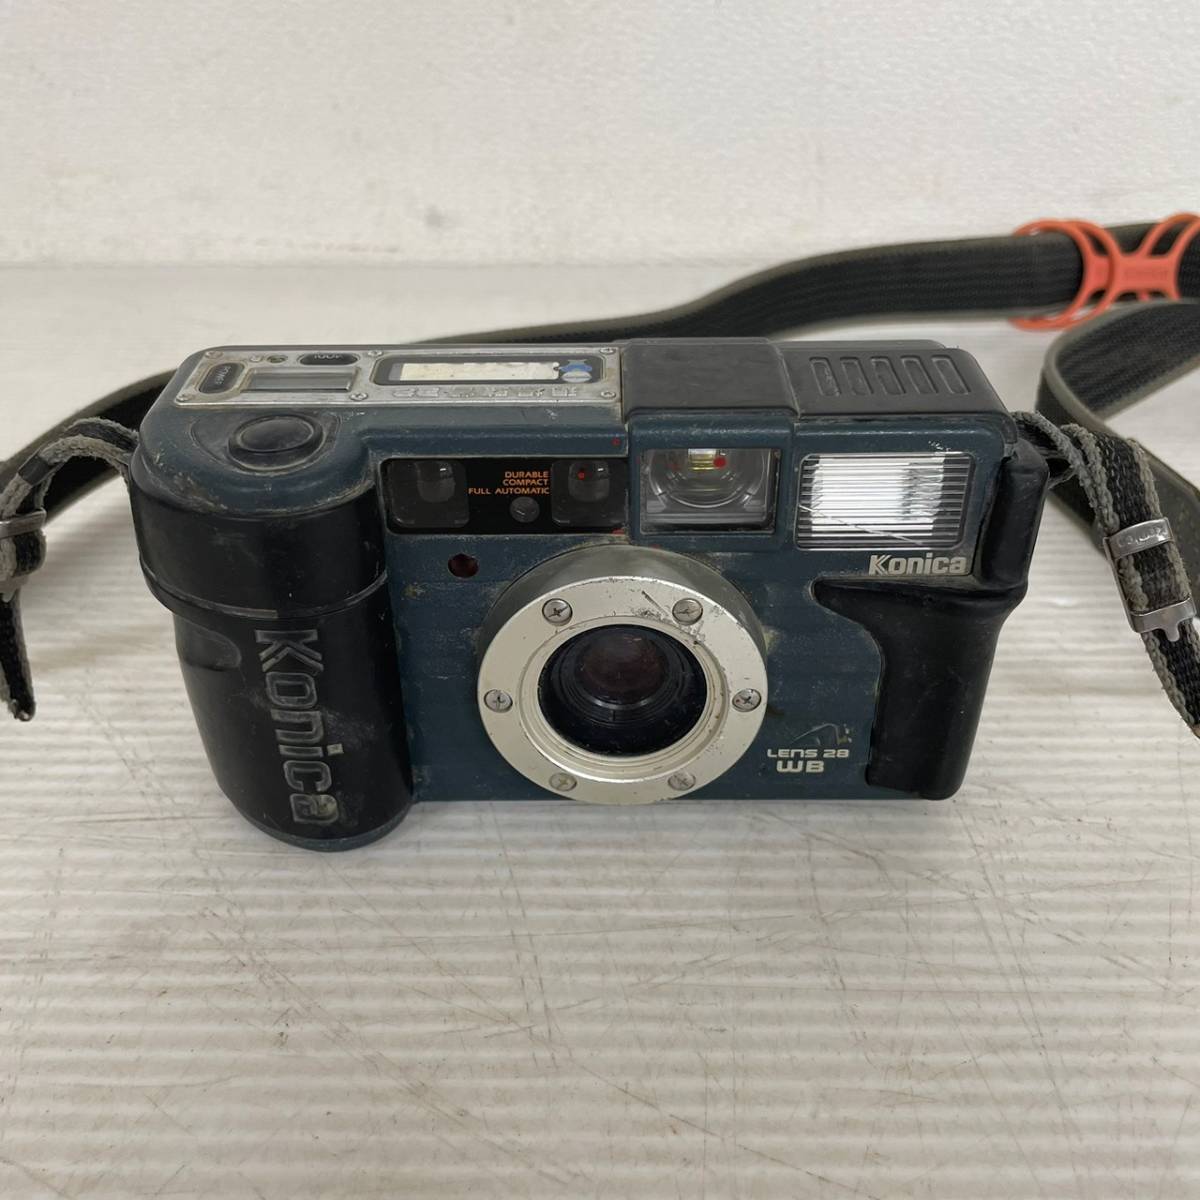 【Konica】コニカ コンパクトカメラ LENS 35 2台セット ジャンク品_画像6